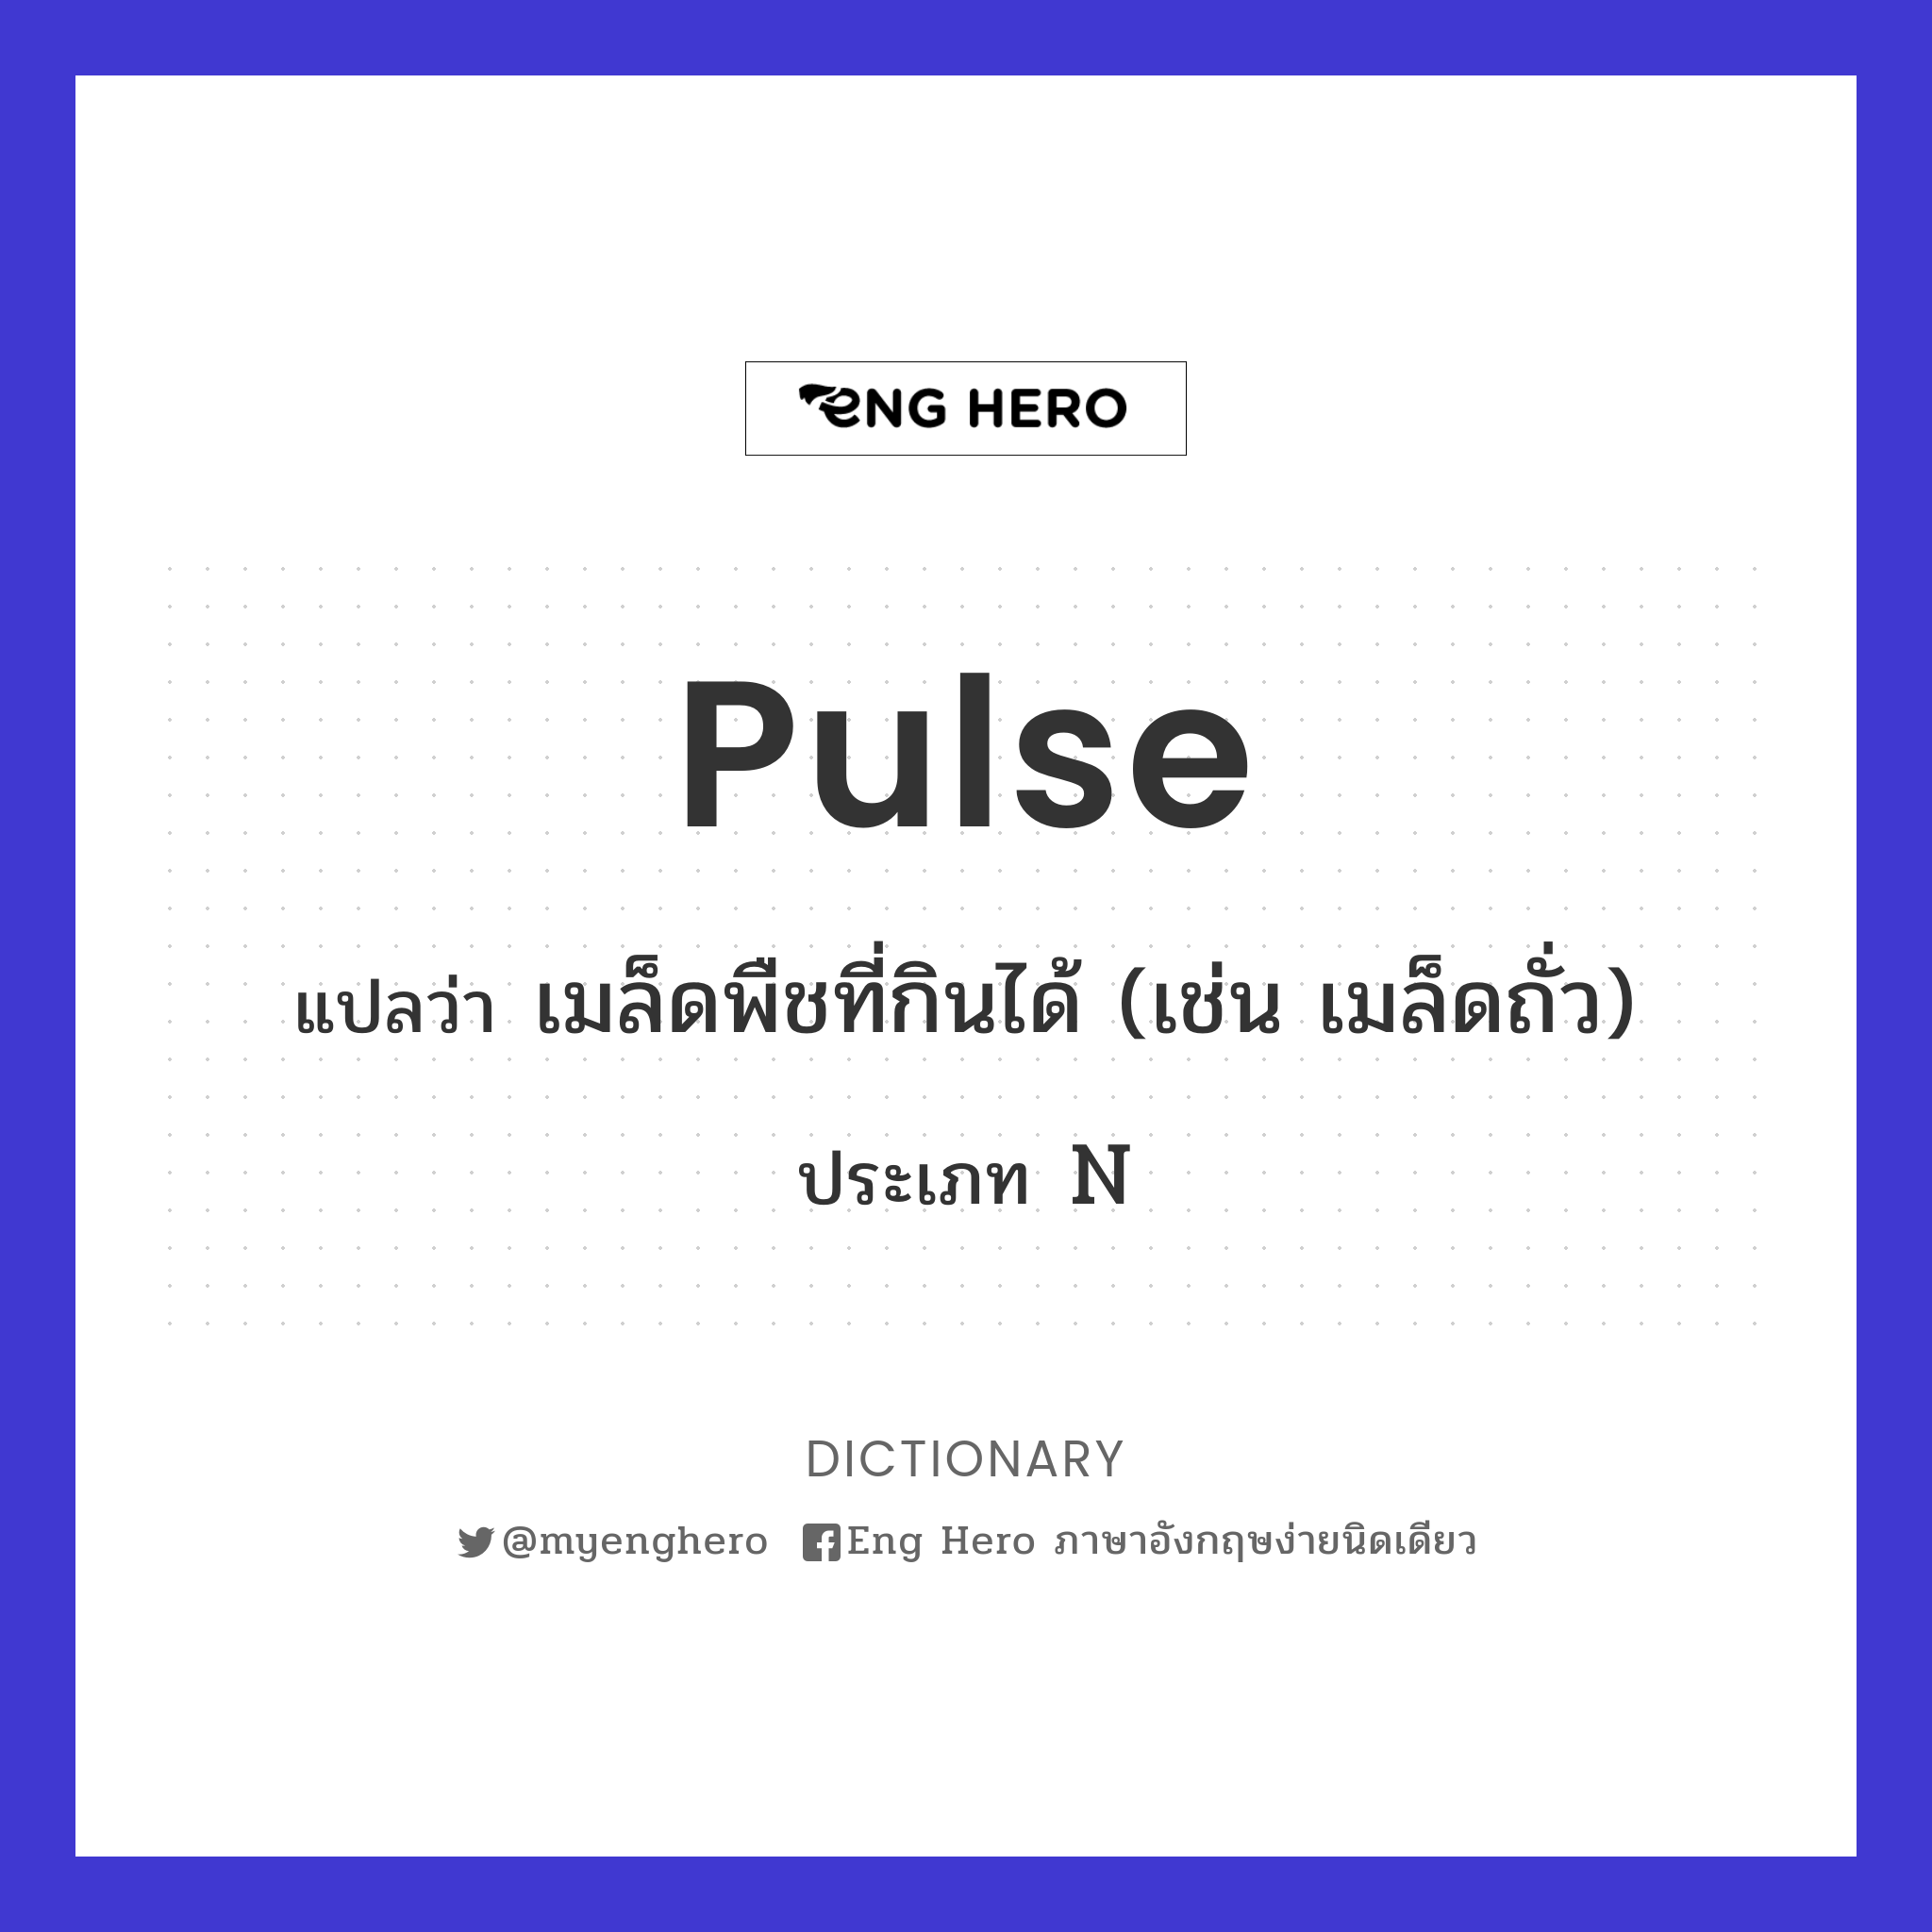 pulse